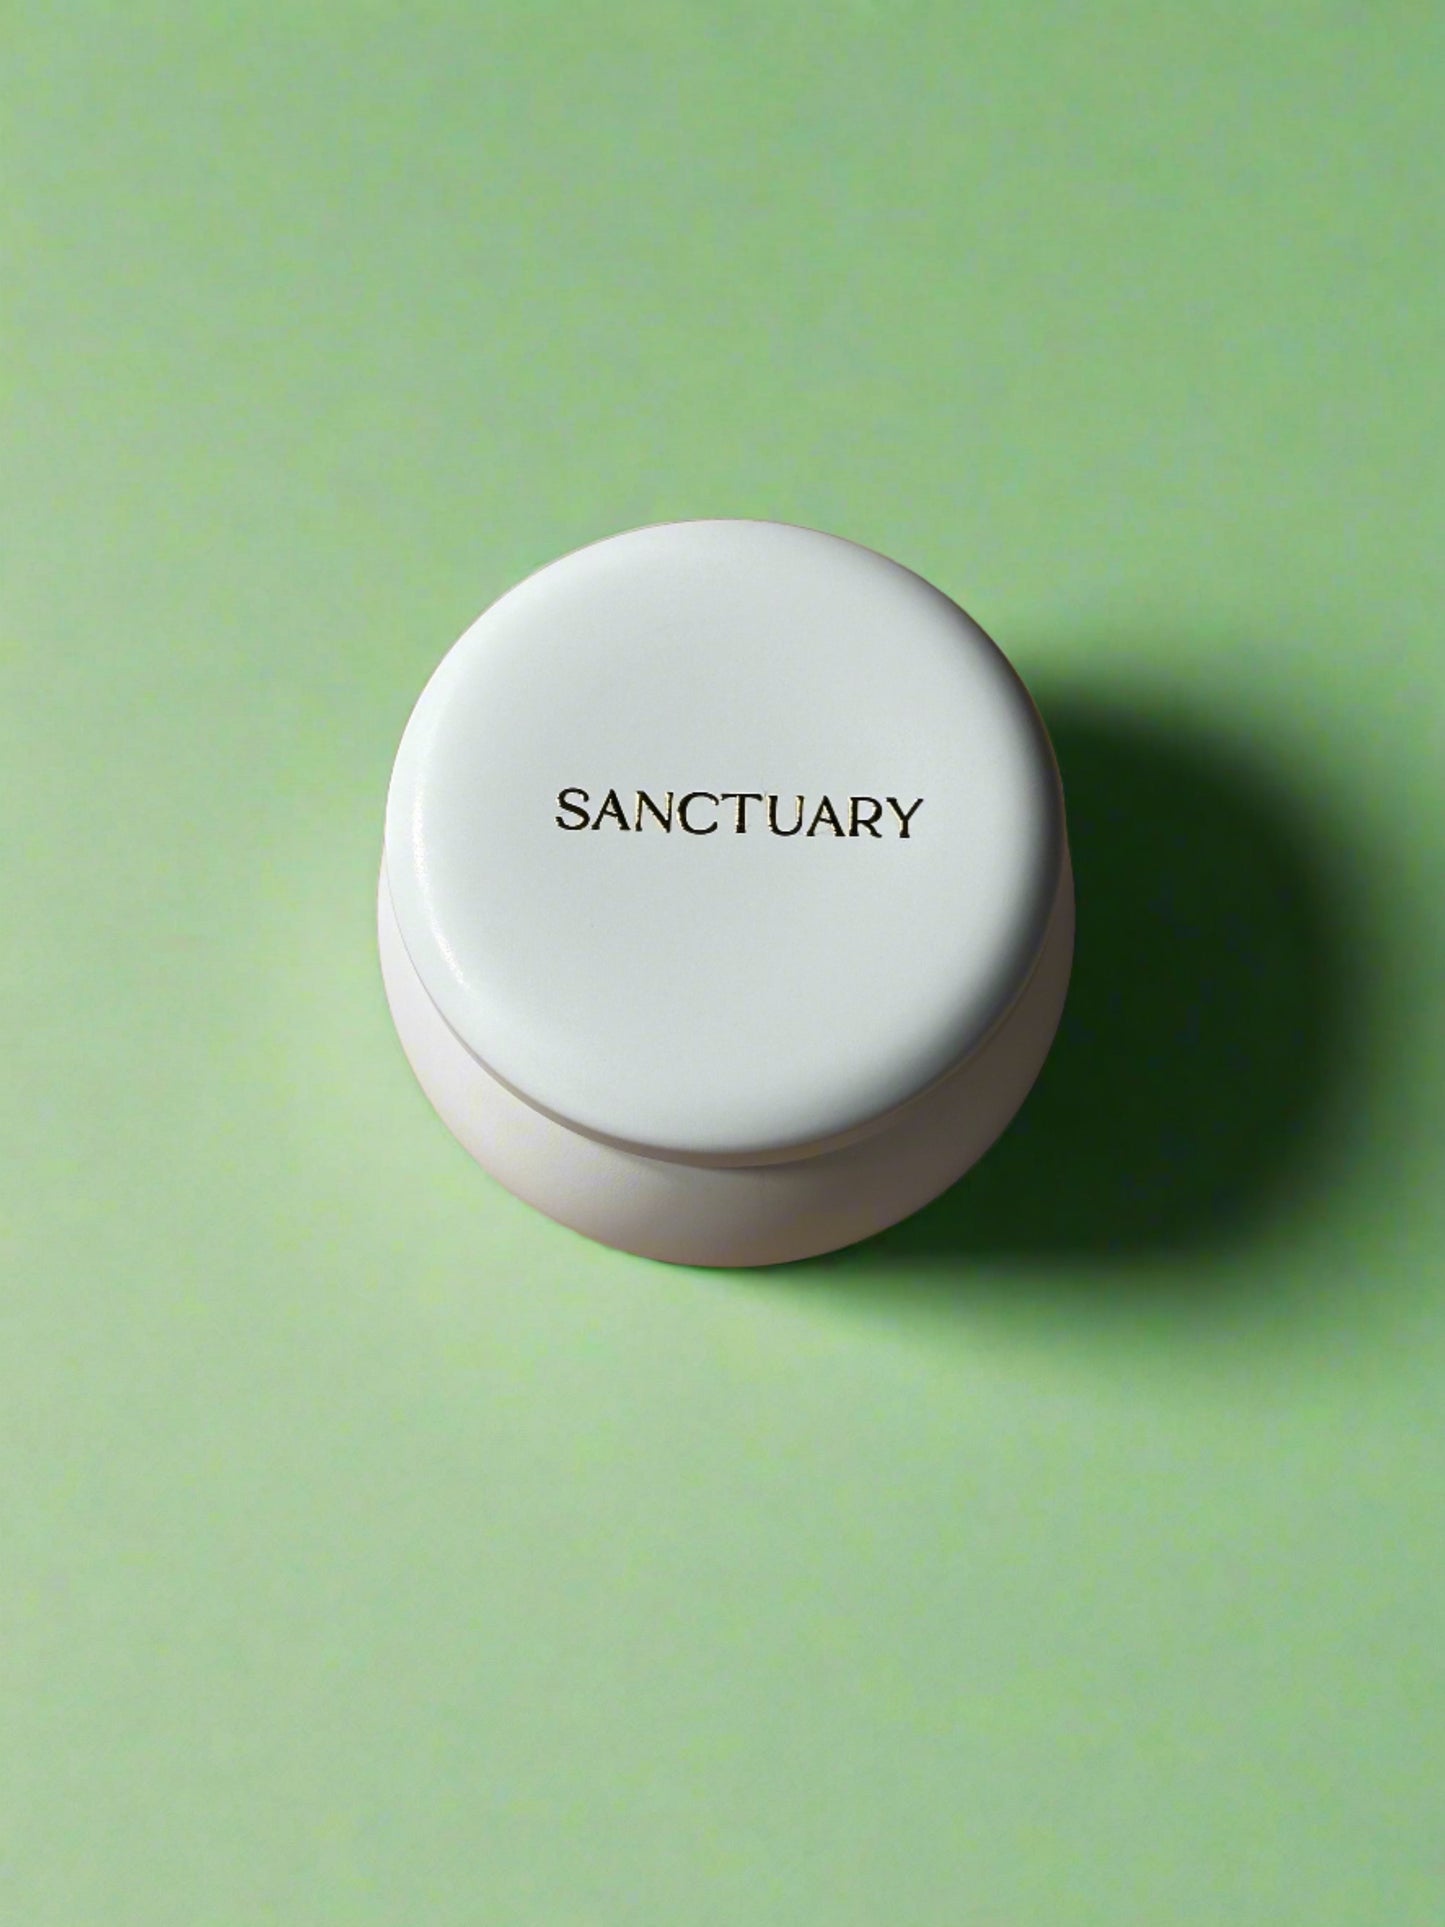 Sanctuary Mini Candle - 4 oz